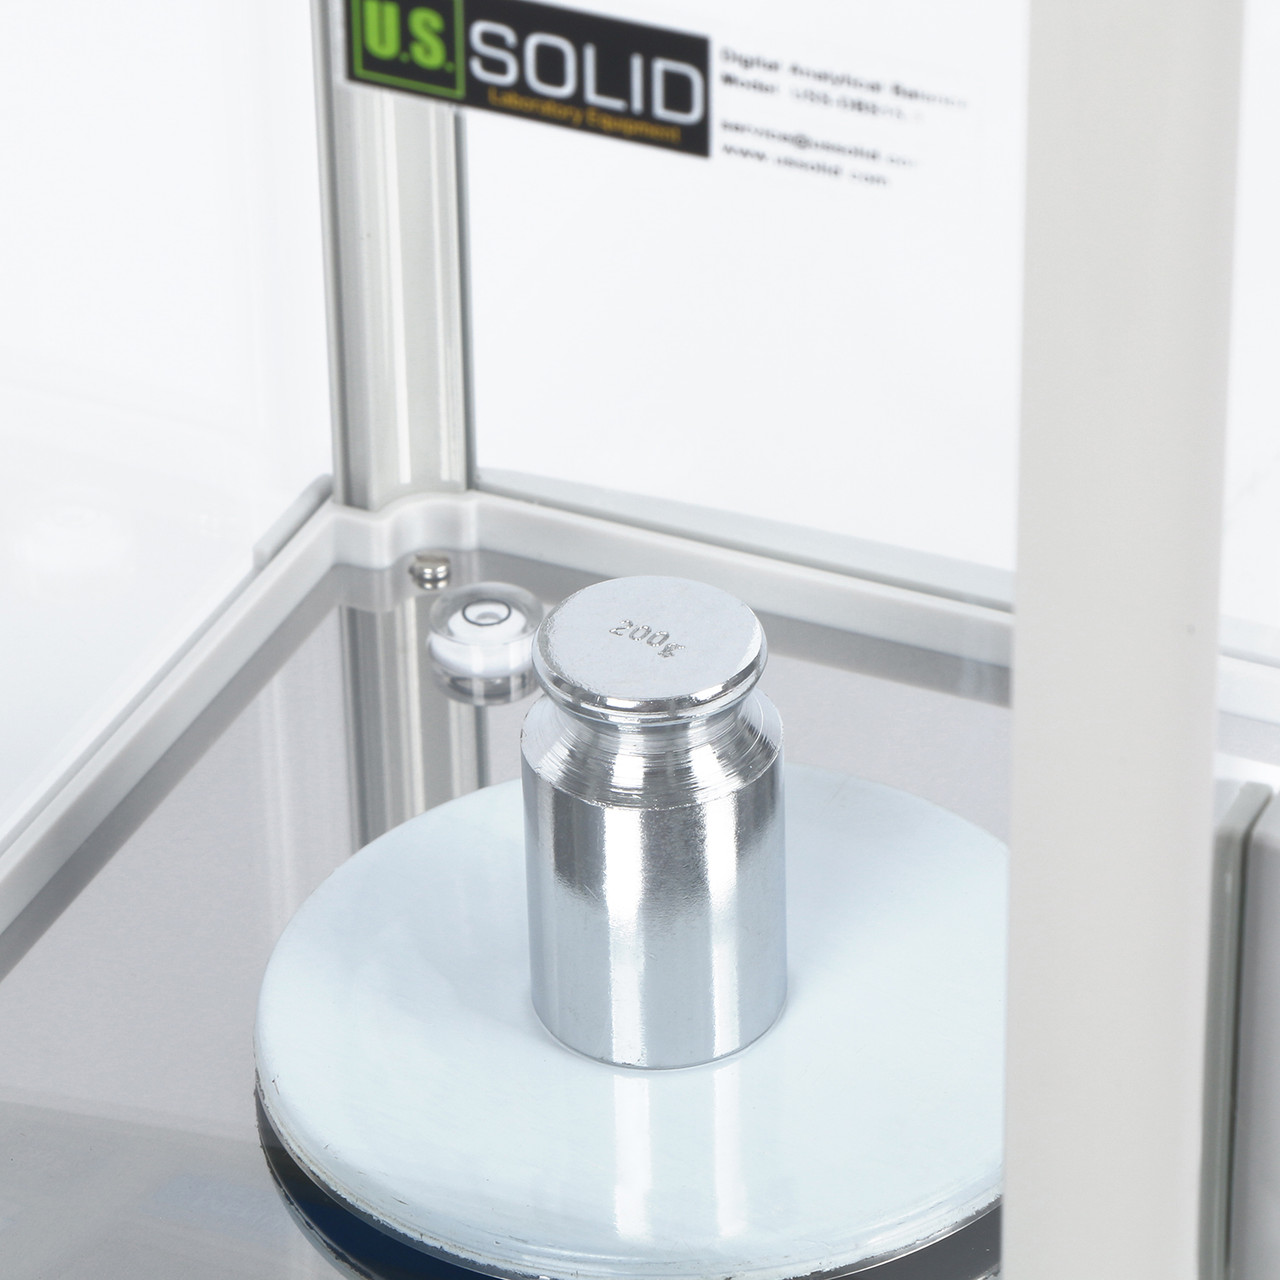 U.S. Solid Precision Balance Digital Lab Scale 5kg x 0.01g, RS232